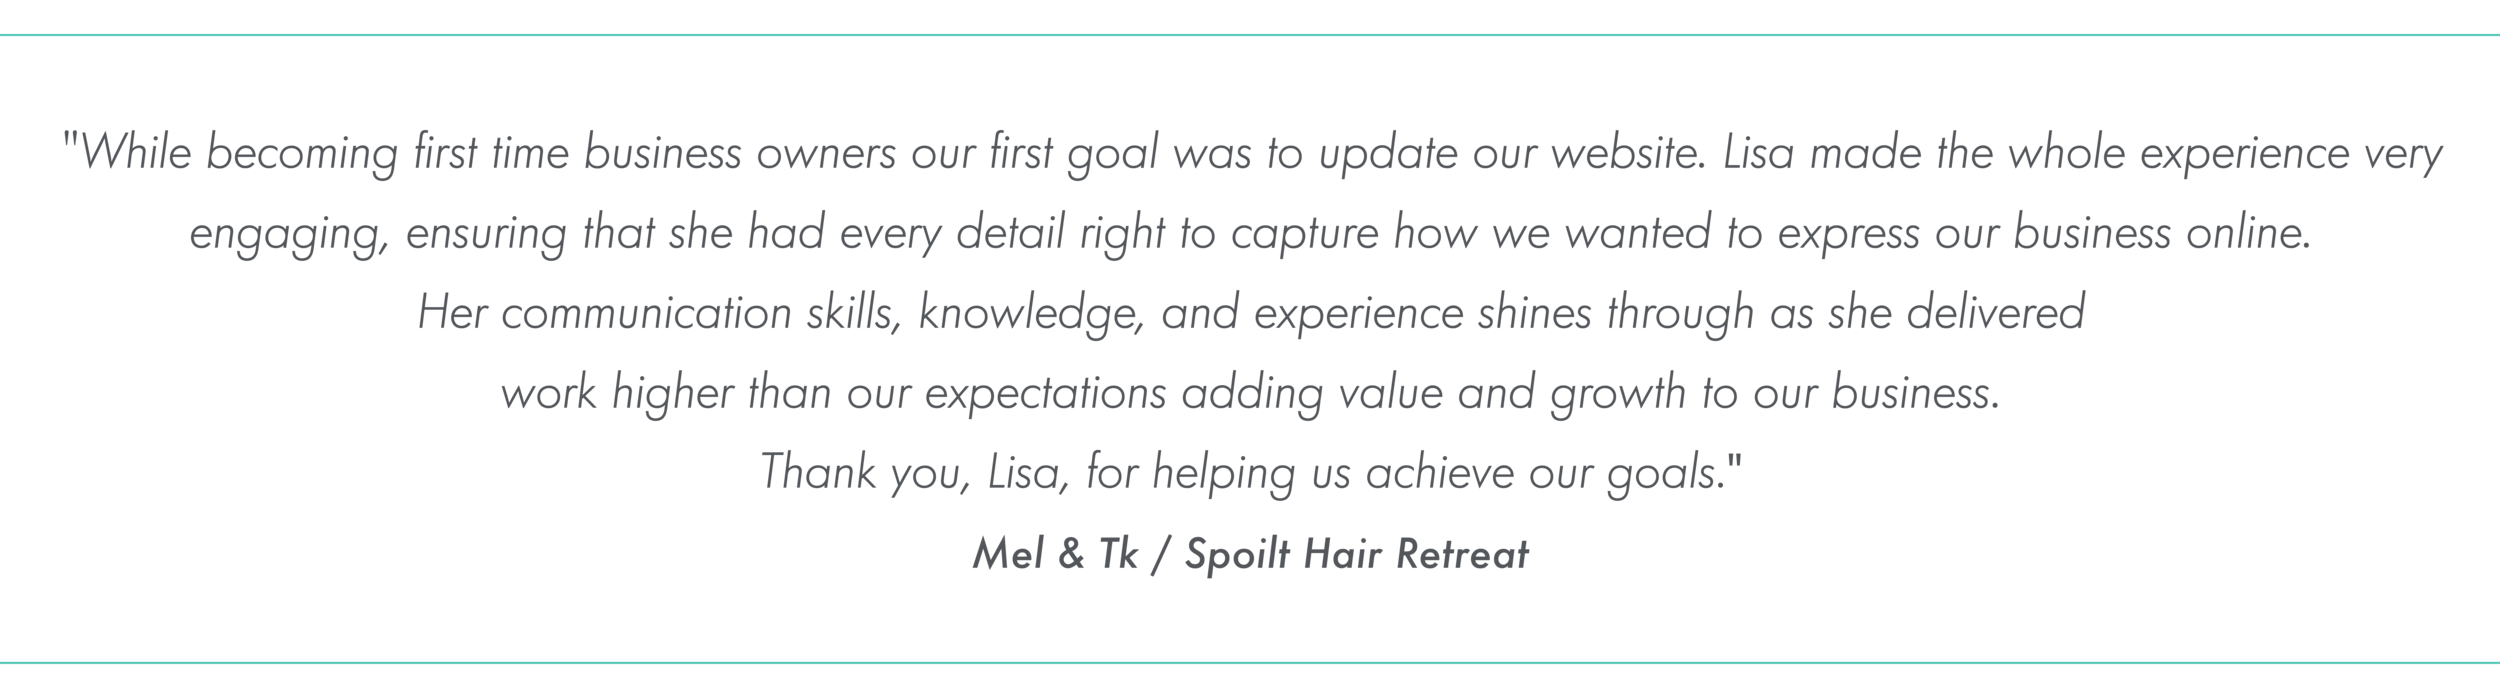 Mel & Tk _ Spoilt Hair Retreat.png